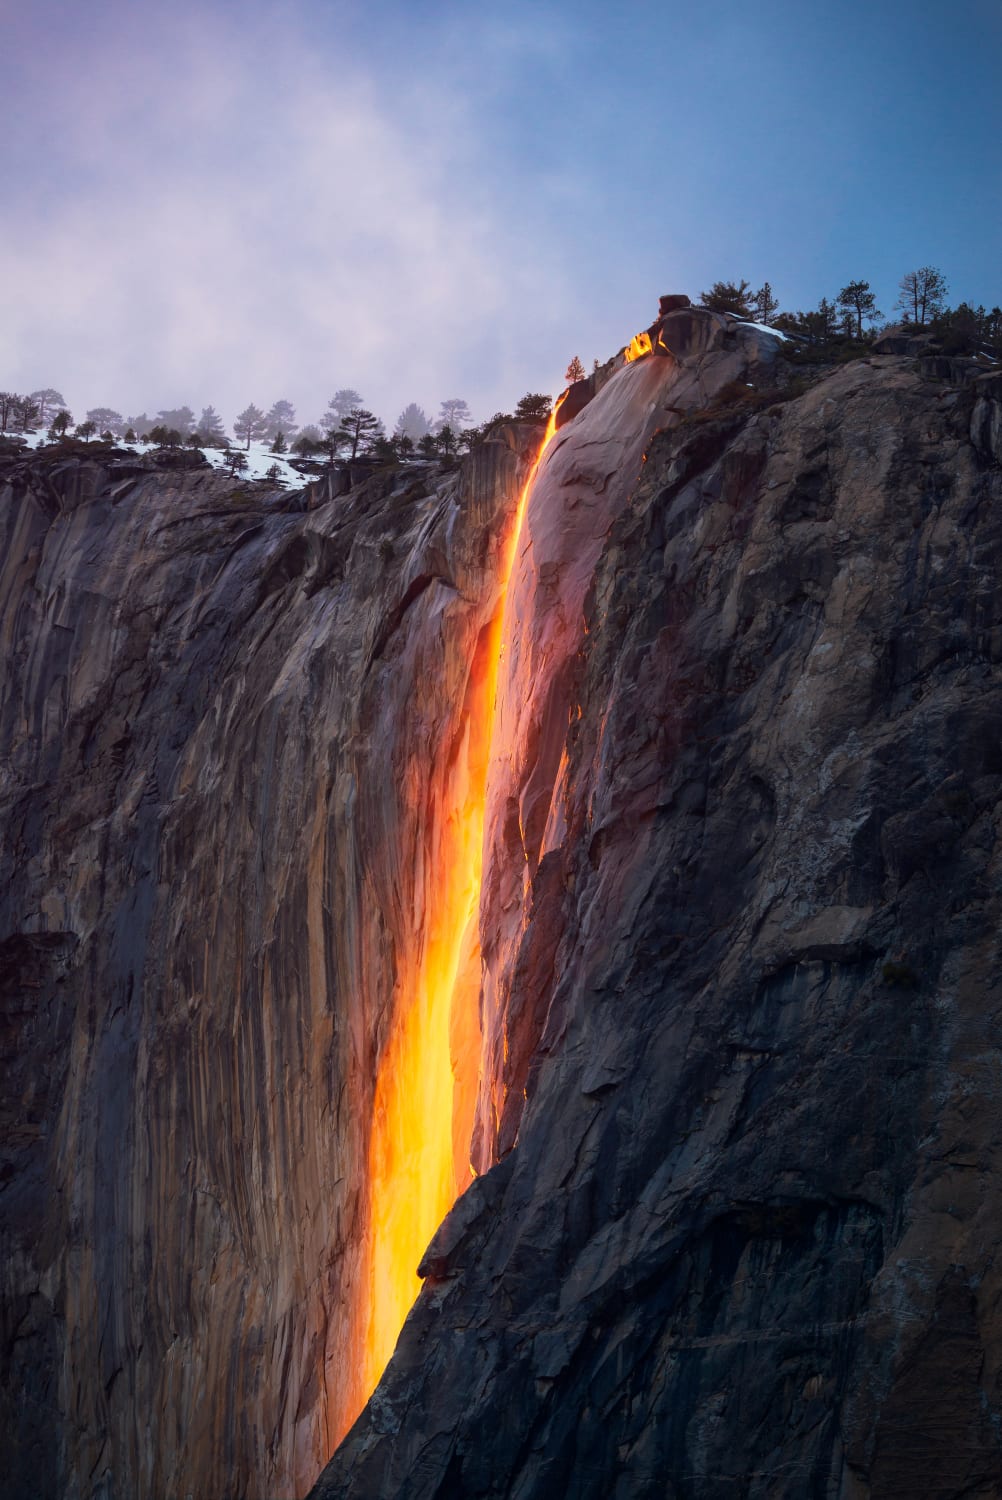 Firefall yesterday in Yosemite National Park, California